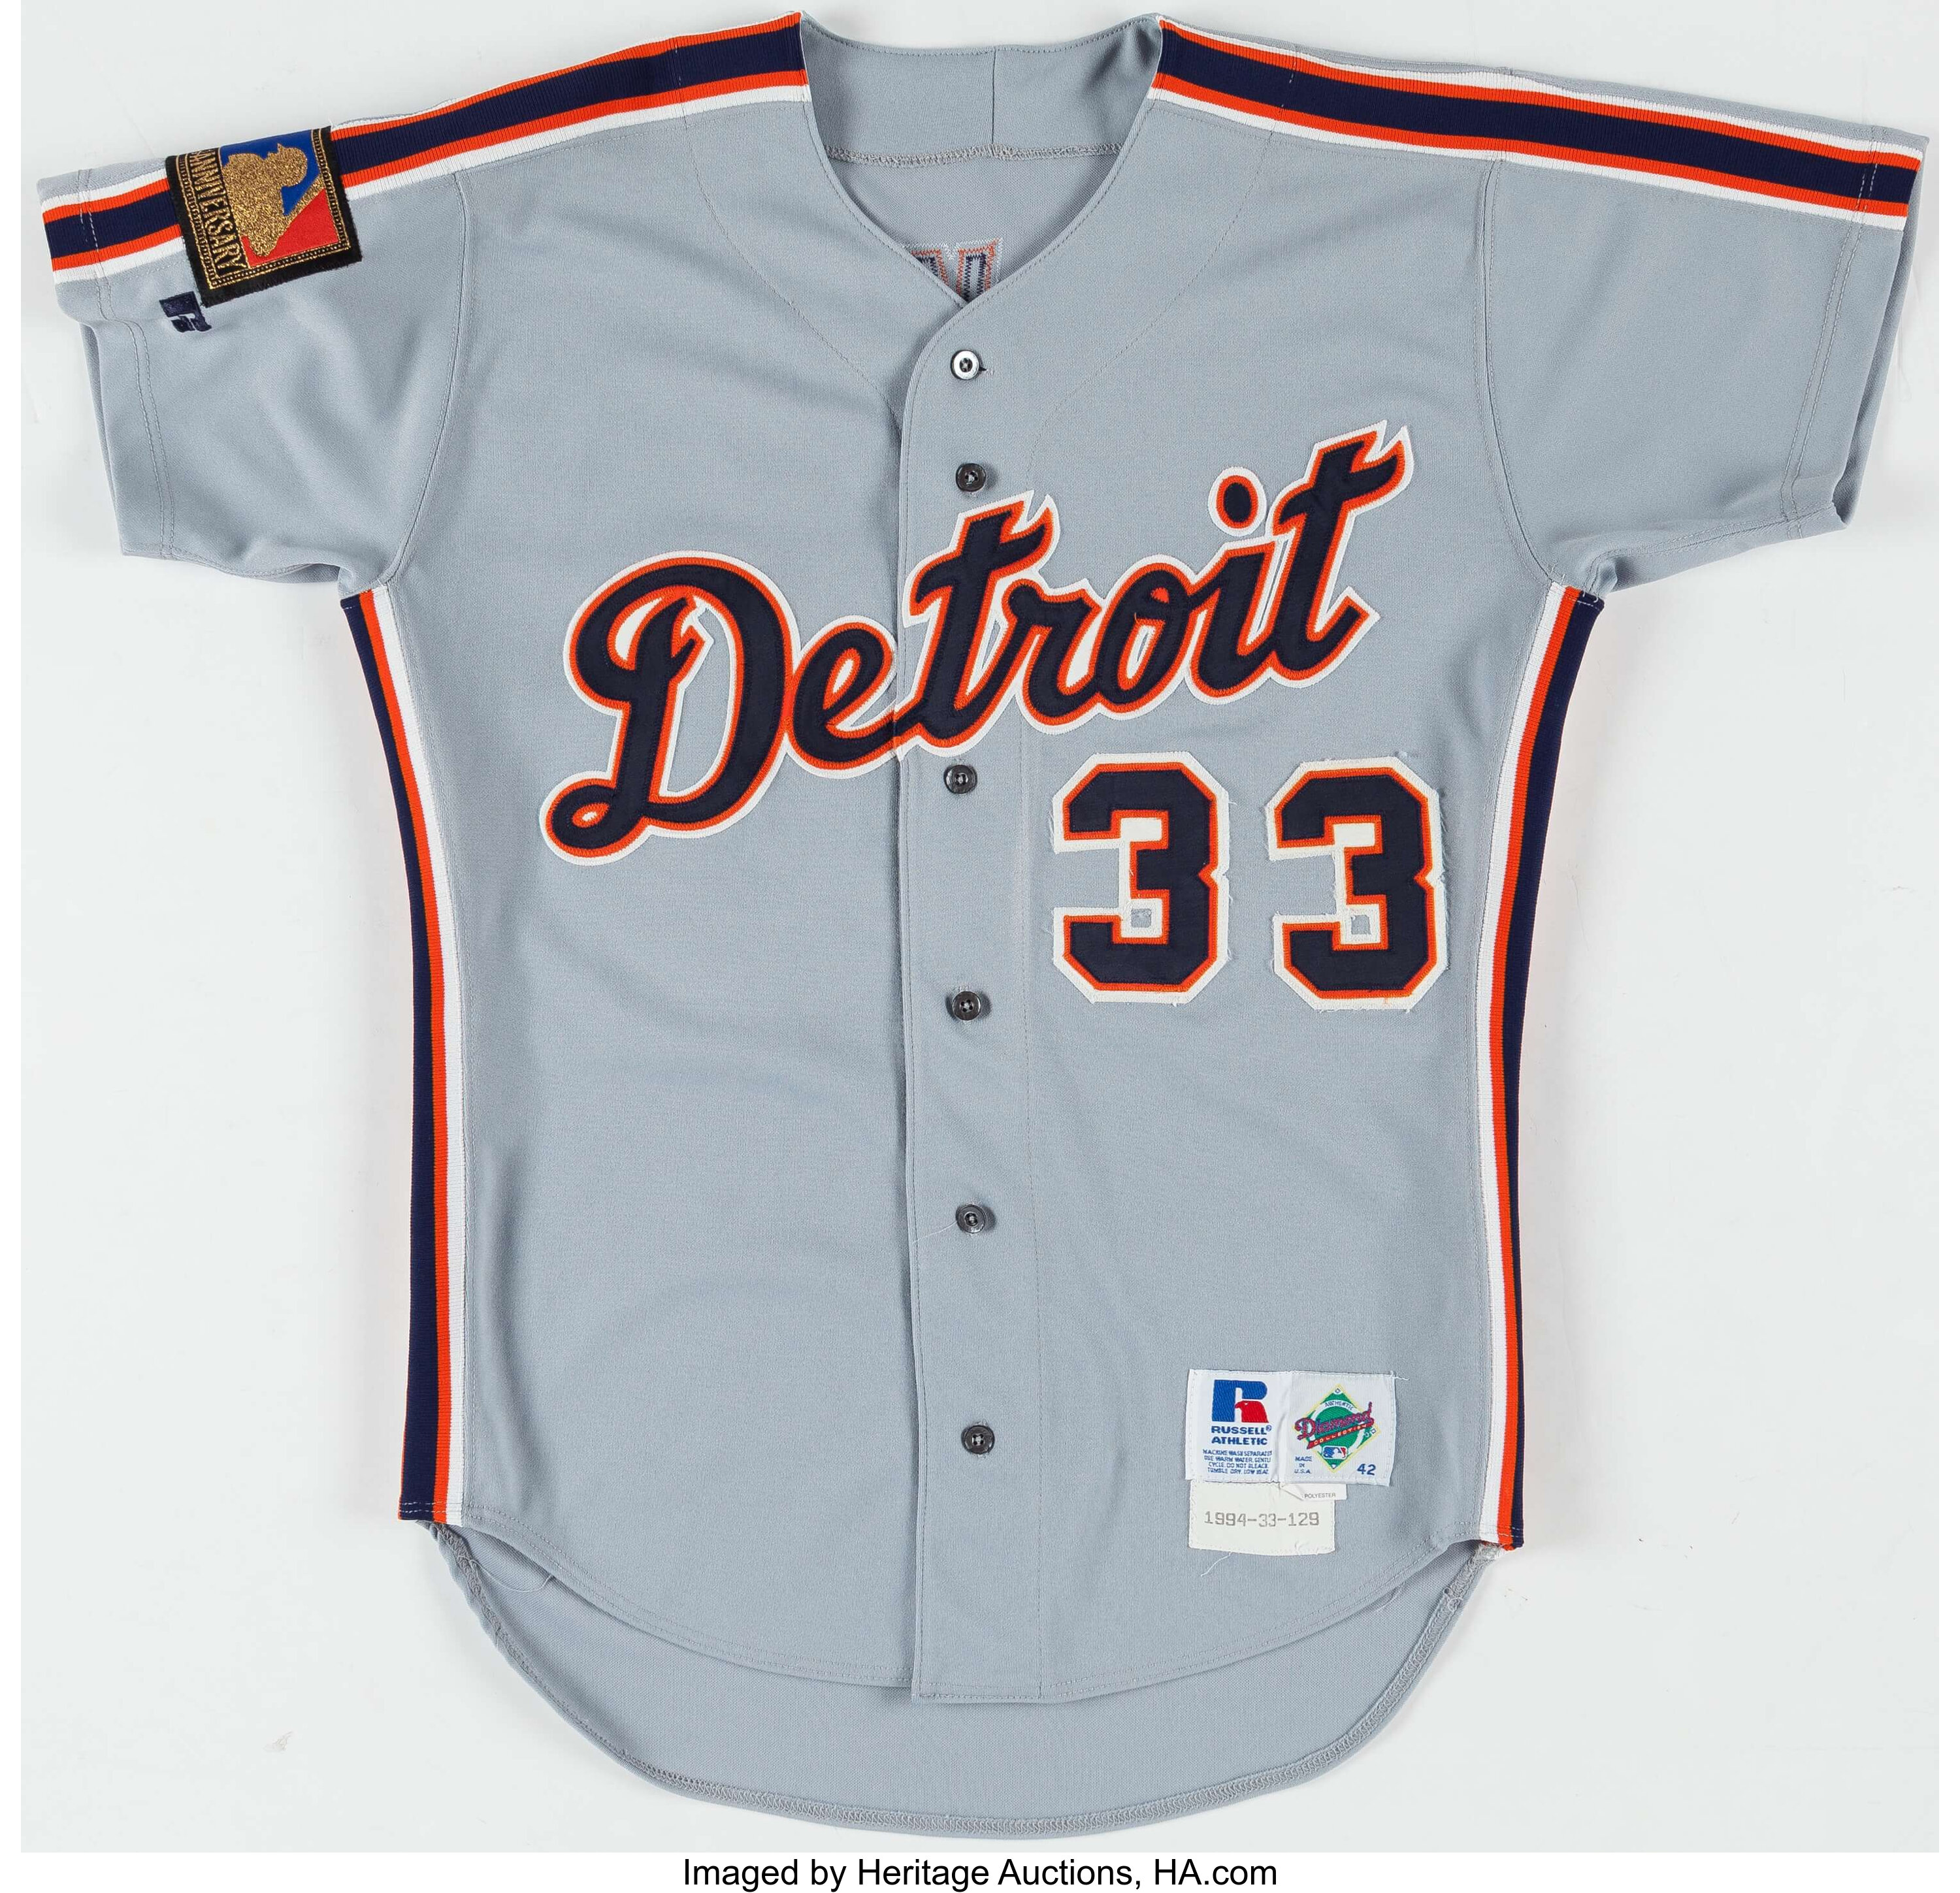 Detroit Tigers Jersey, Tigers Baseball Jerseys, Uniforms